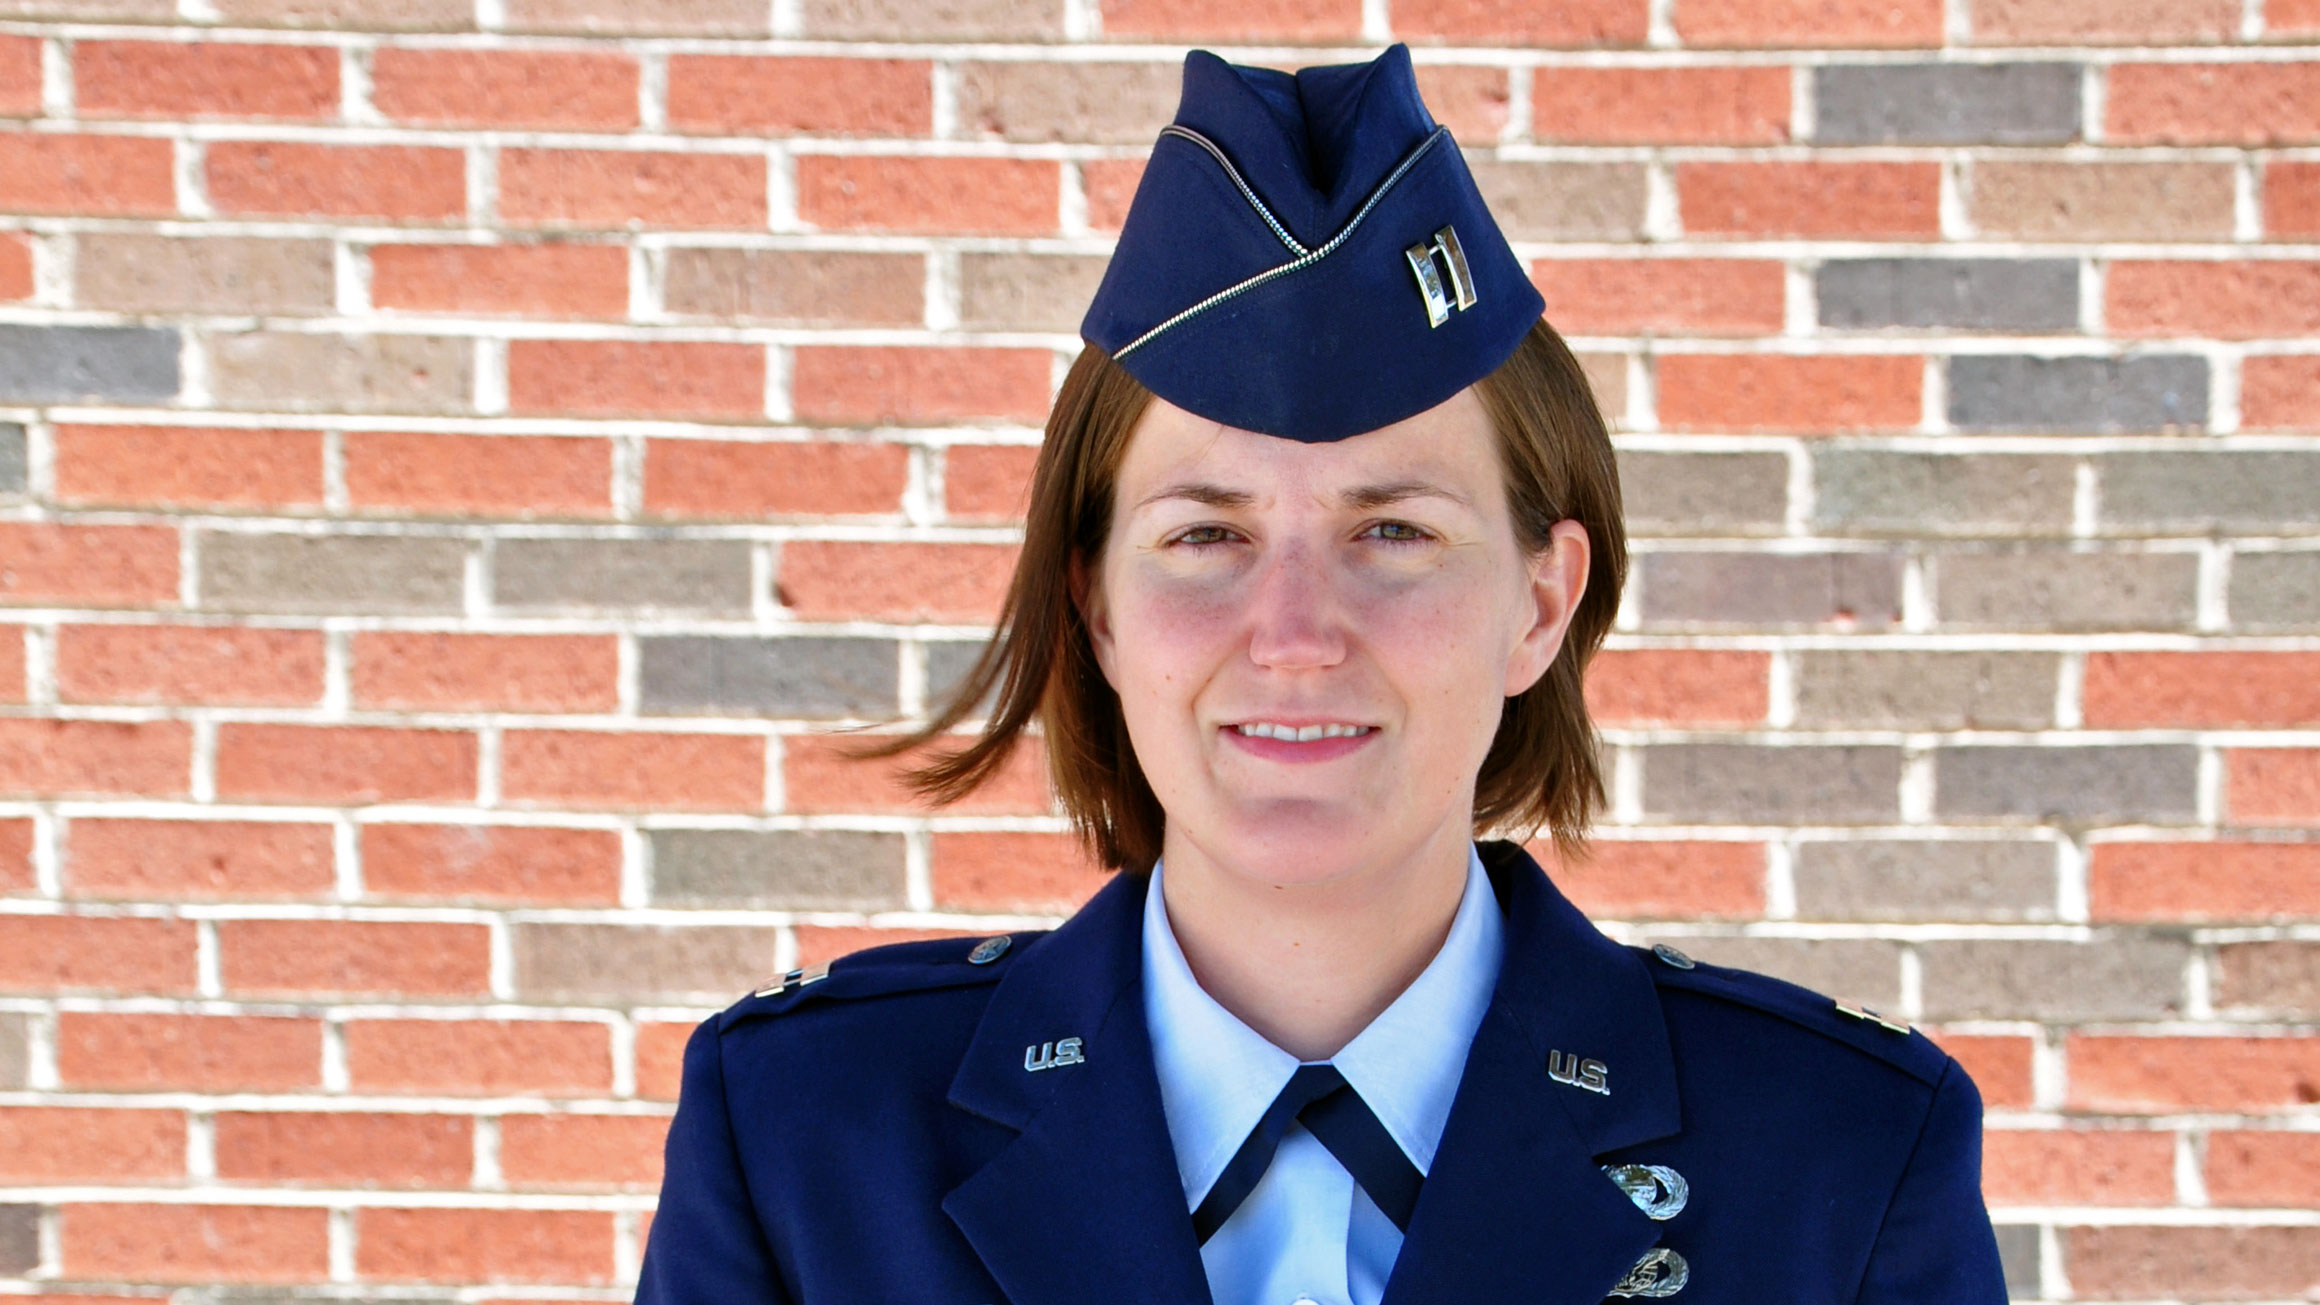 A portrait of Lauren Maloney in a blue military uniform